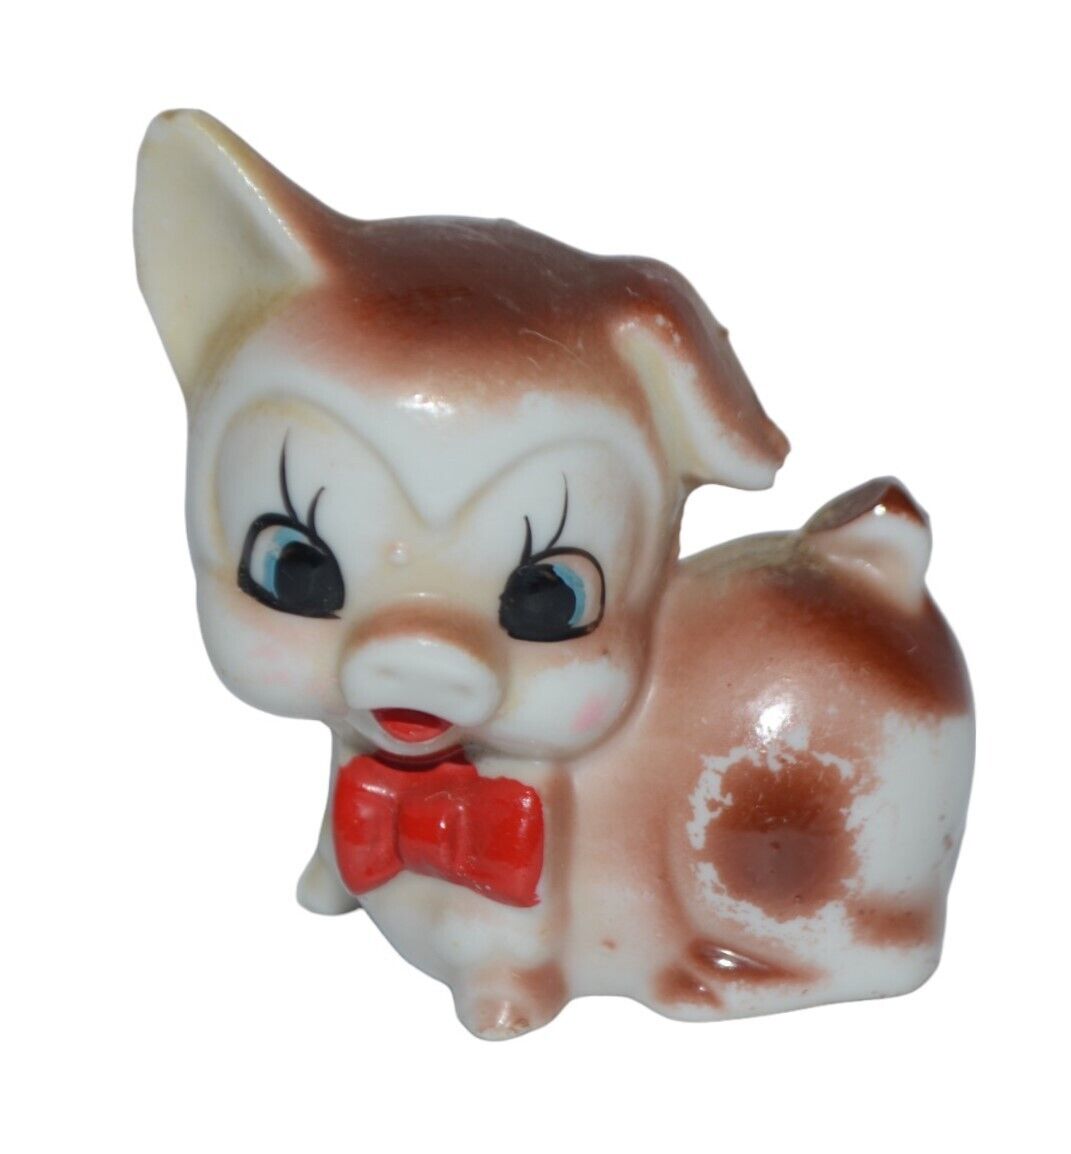 Vintage Pig Figurine Anthropomorphic Kitschy Ceramic Made in Japan